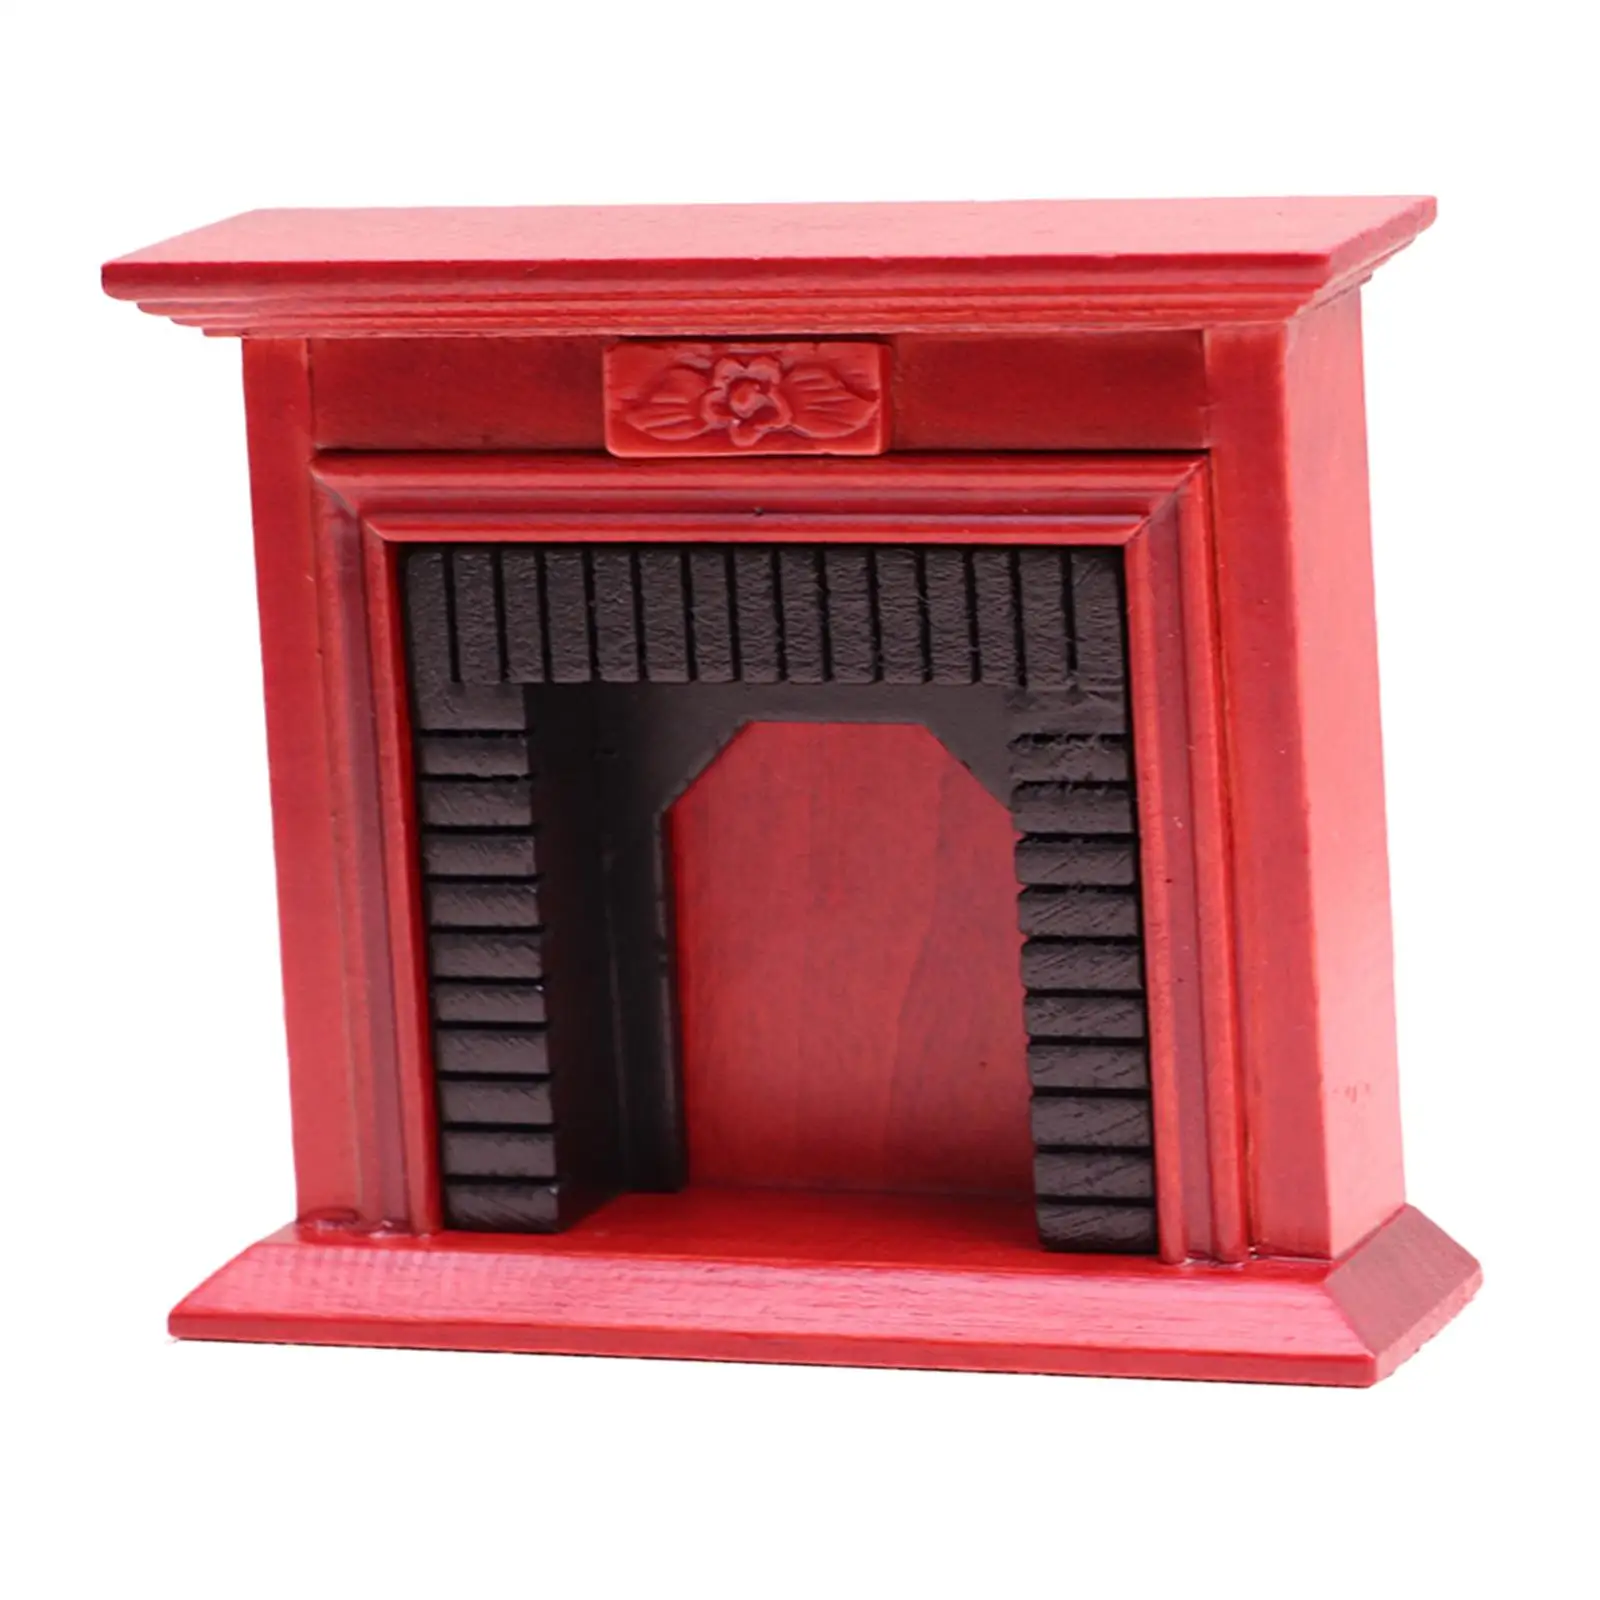 Miniature Fireplace Miniature Dollhouse Decoration Accessory Toy Vintage